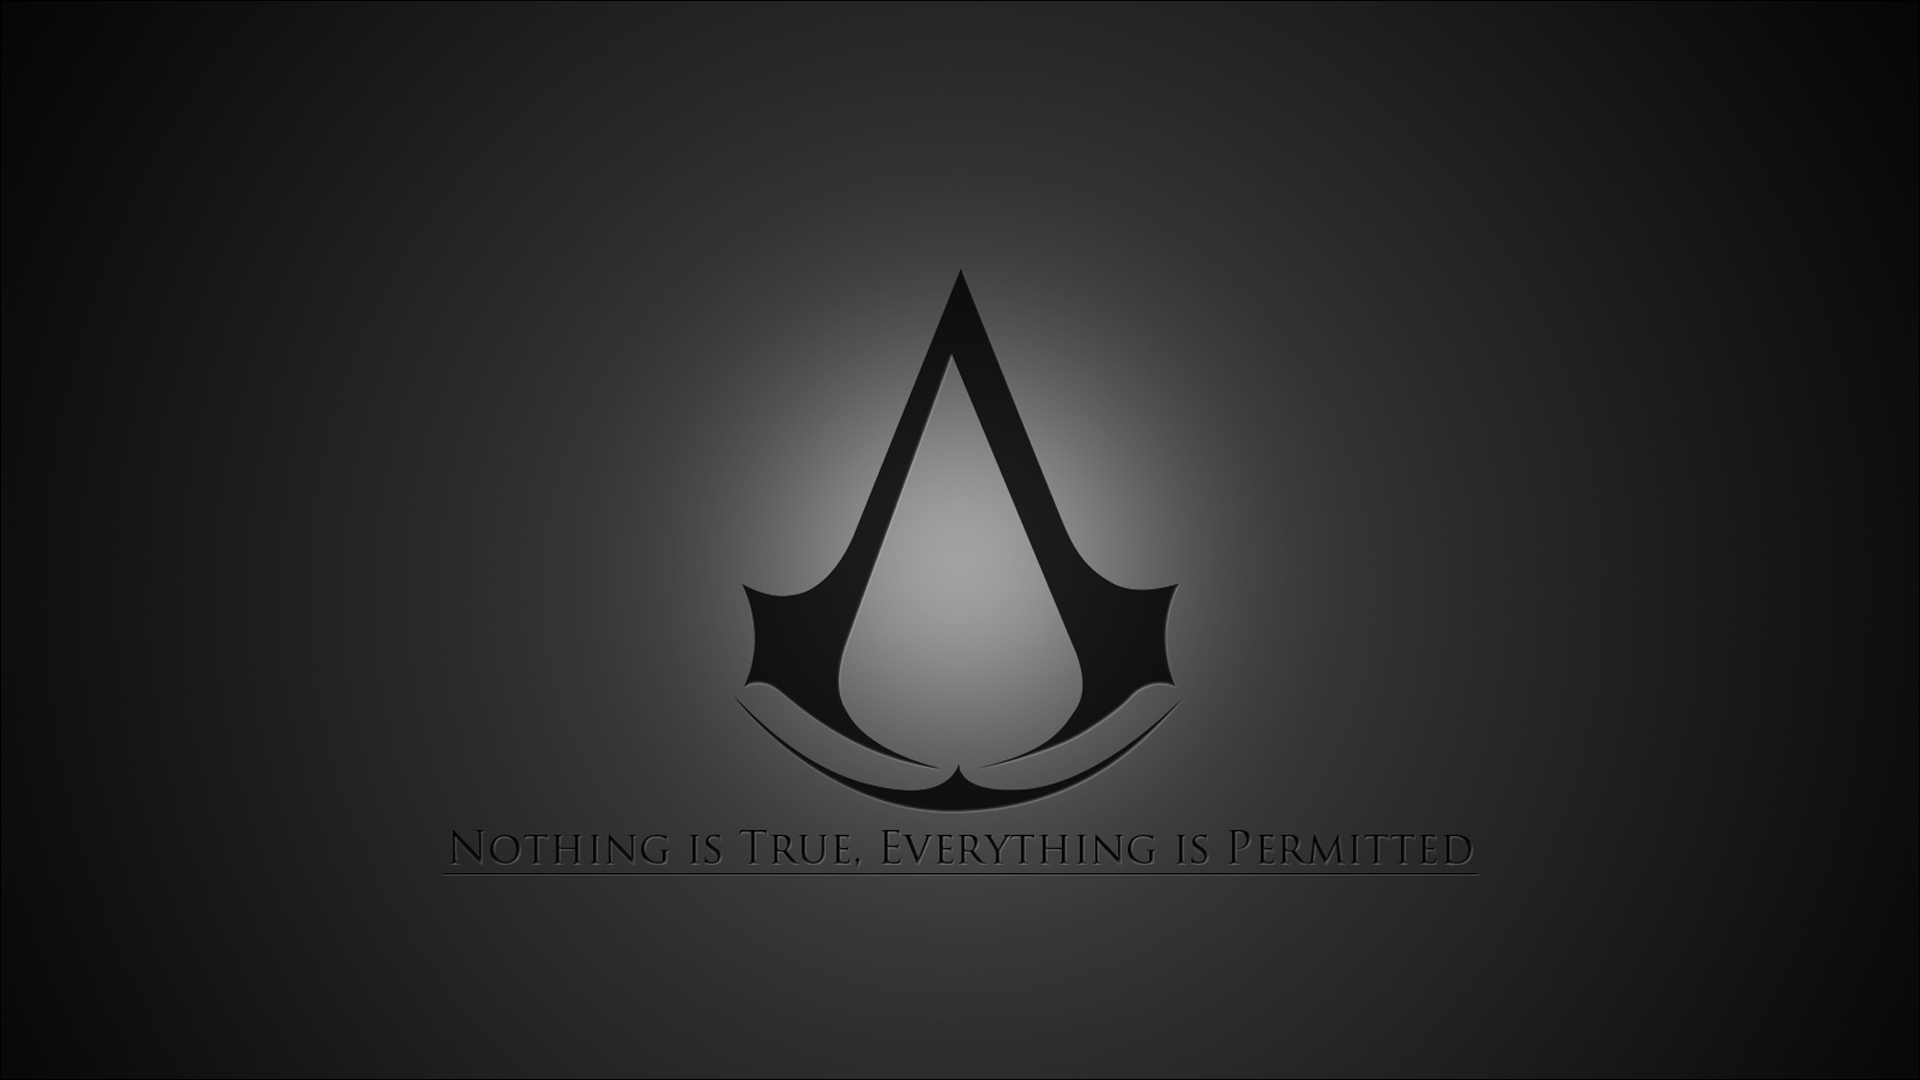 The Assassins Creed motto wallpaper   690975 1920x1080